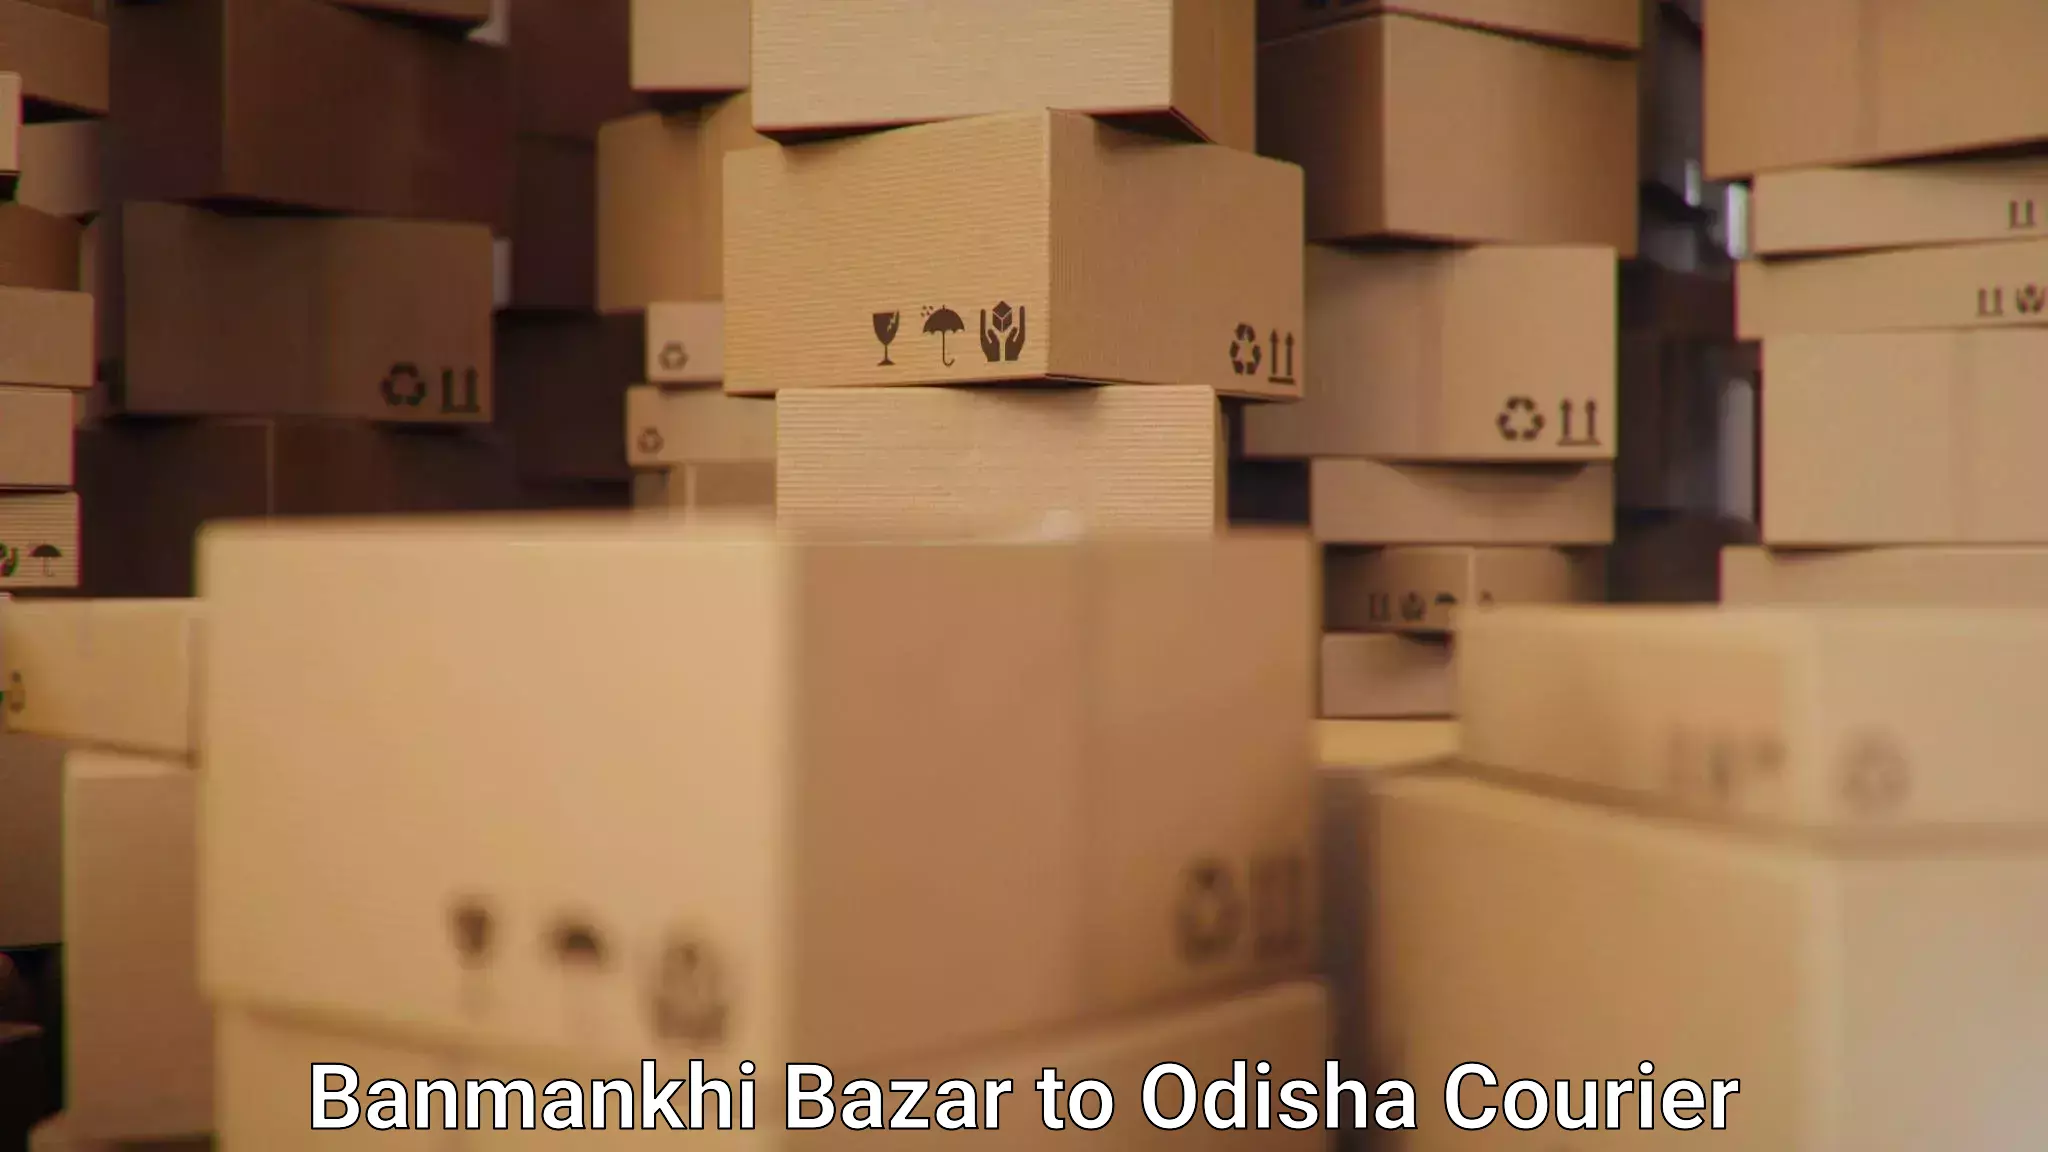 User-friendly delivery service Banmankhi Bazar to Odisha